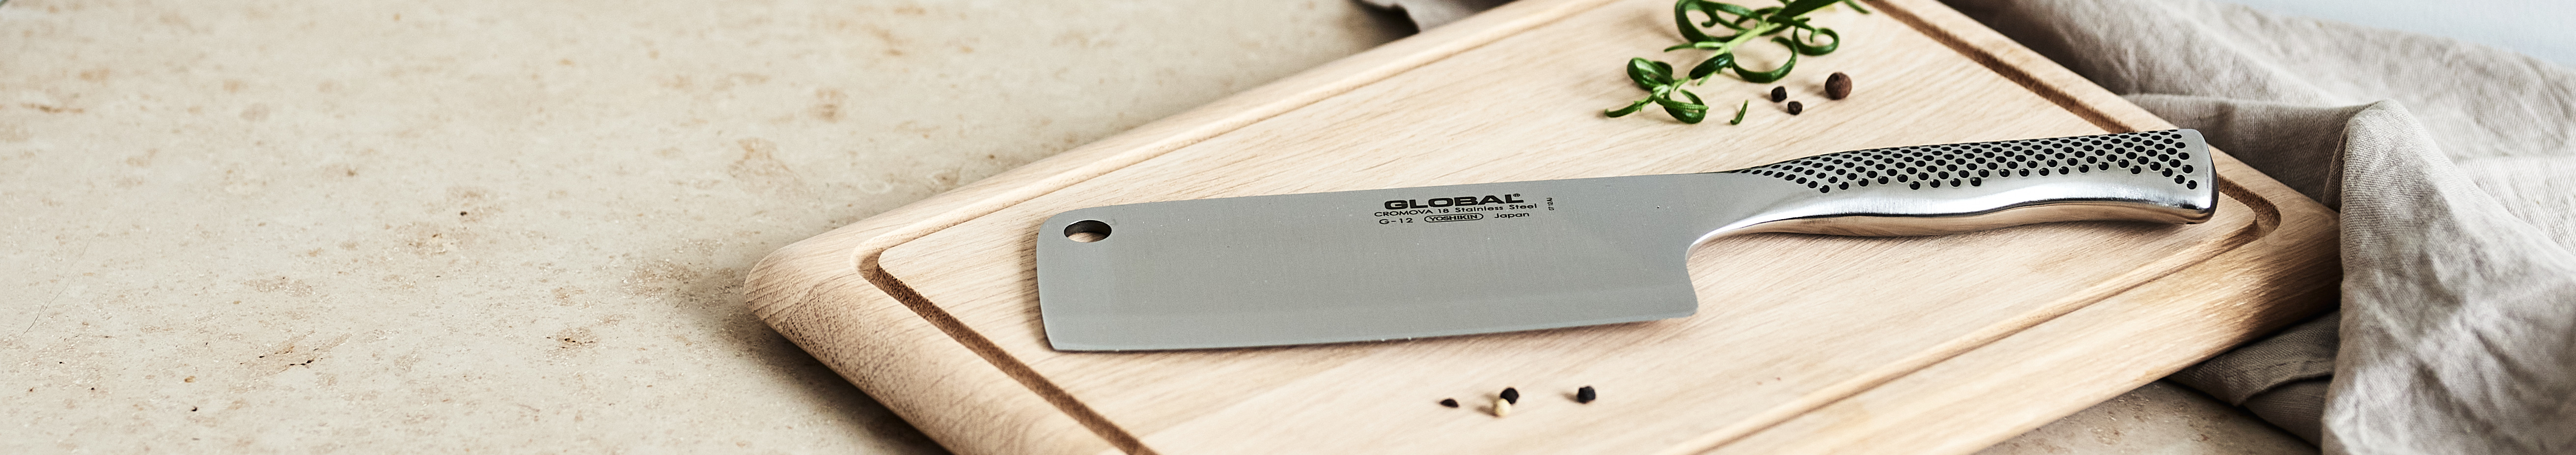 Global knives - G12 - Meat Chopper Knife - 16cm - kitchen knife